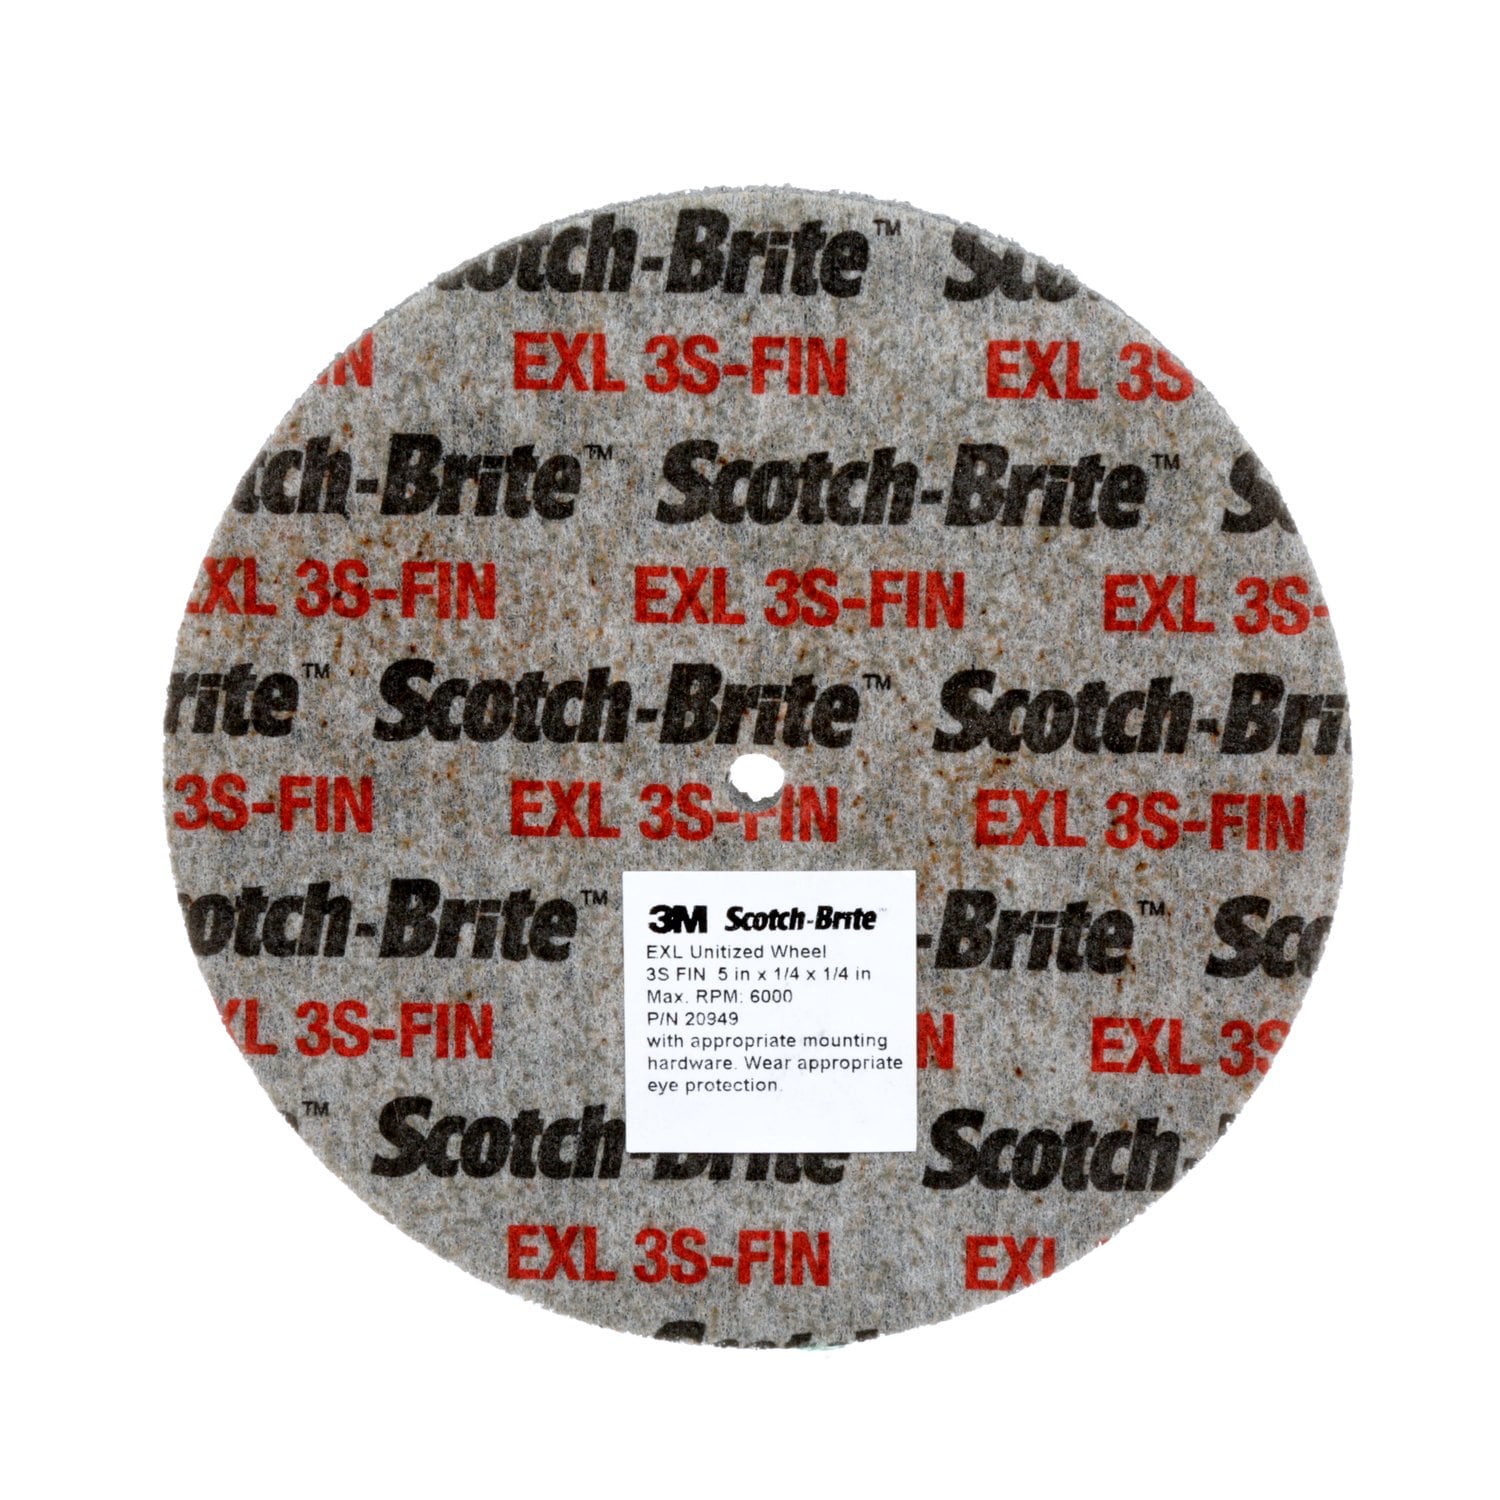 7010290393 - Scotch-Brite SST Unitized Wheel, 6 in x 1/2 in x 1/2 in 3S FIN, 4
ea/Case